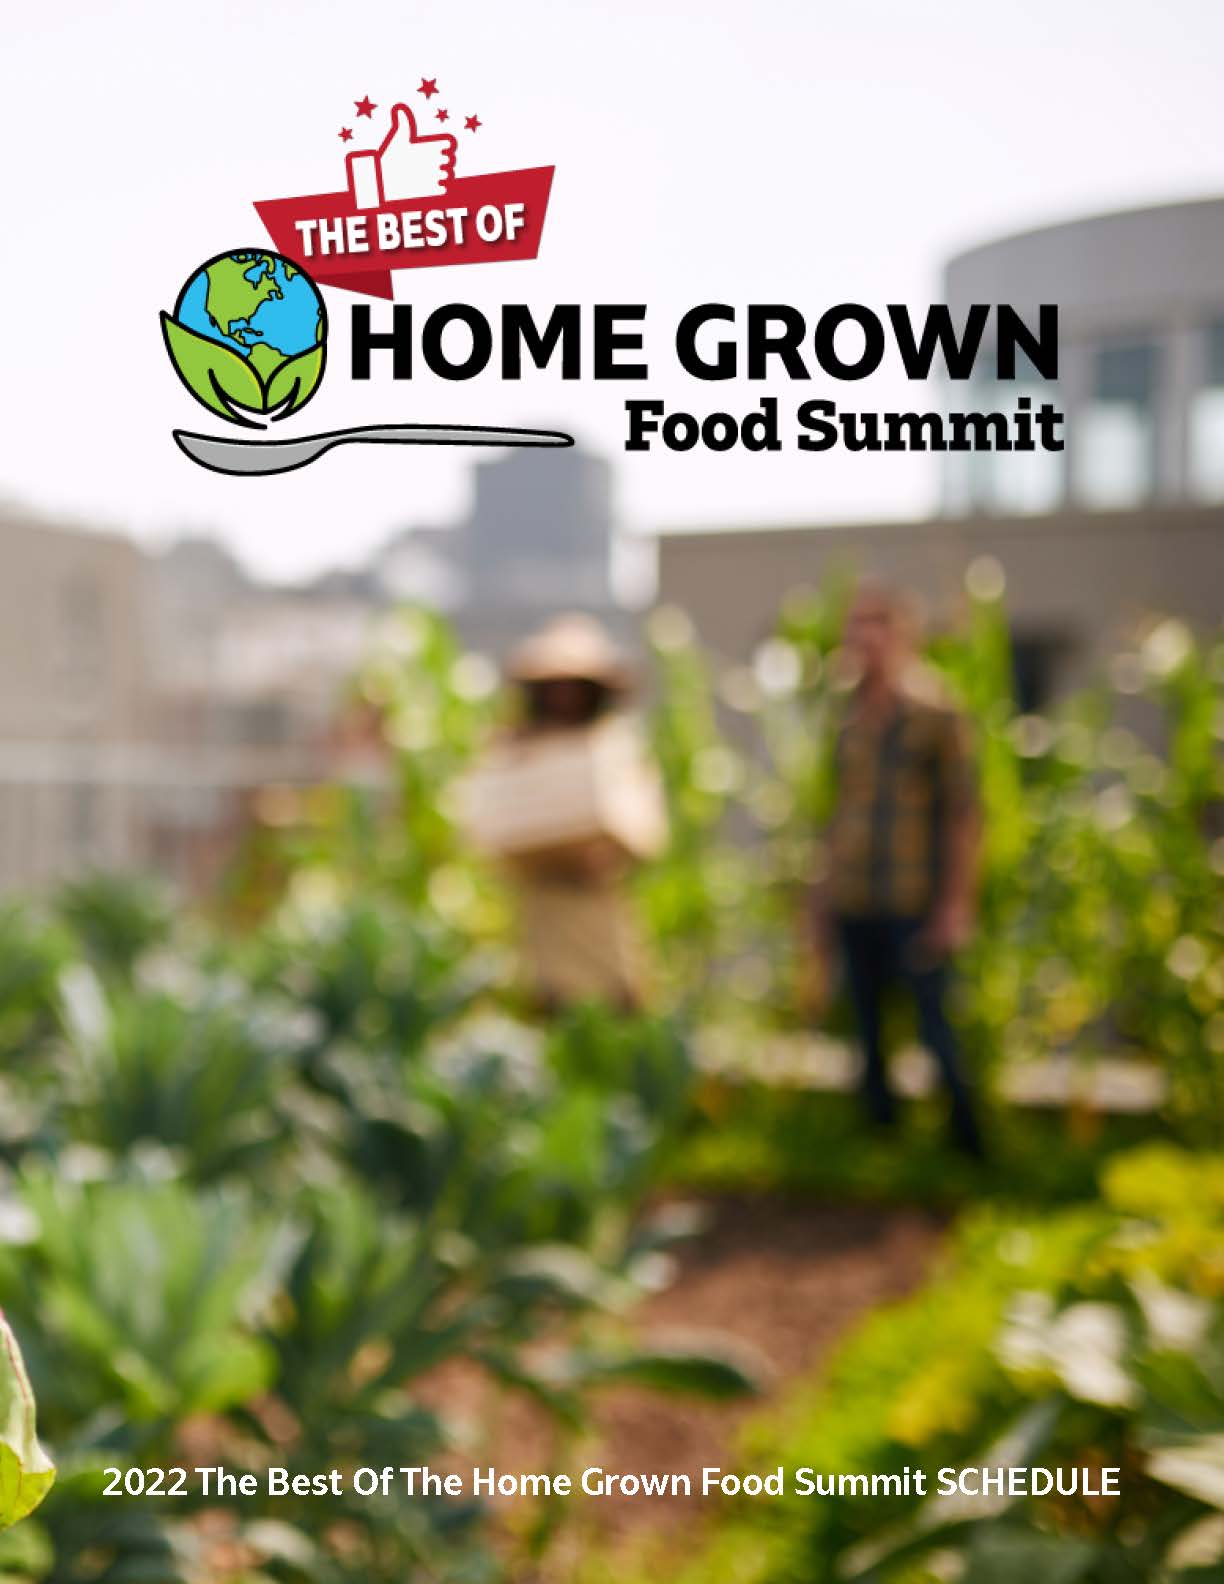 Best of Home Grown Food Summit 2022 Schedule